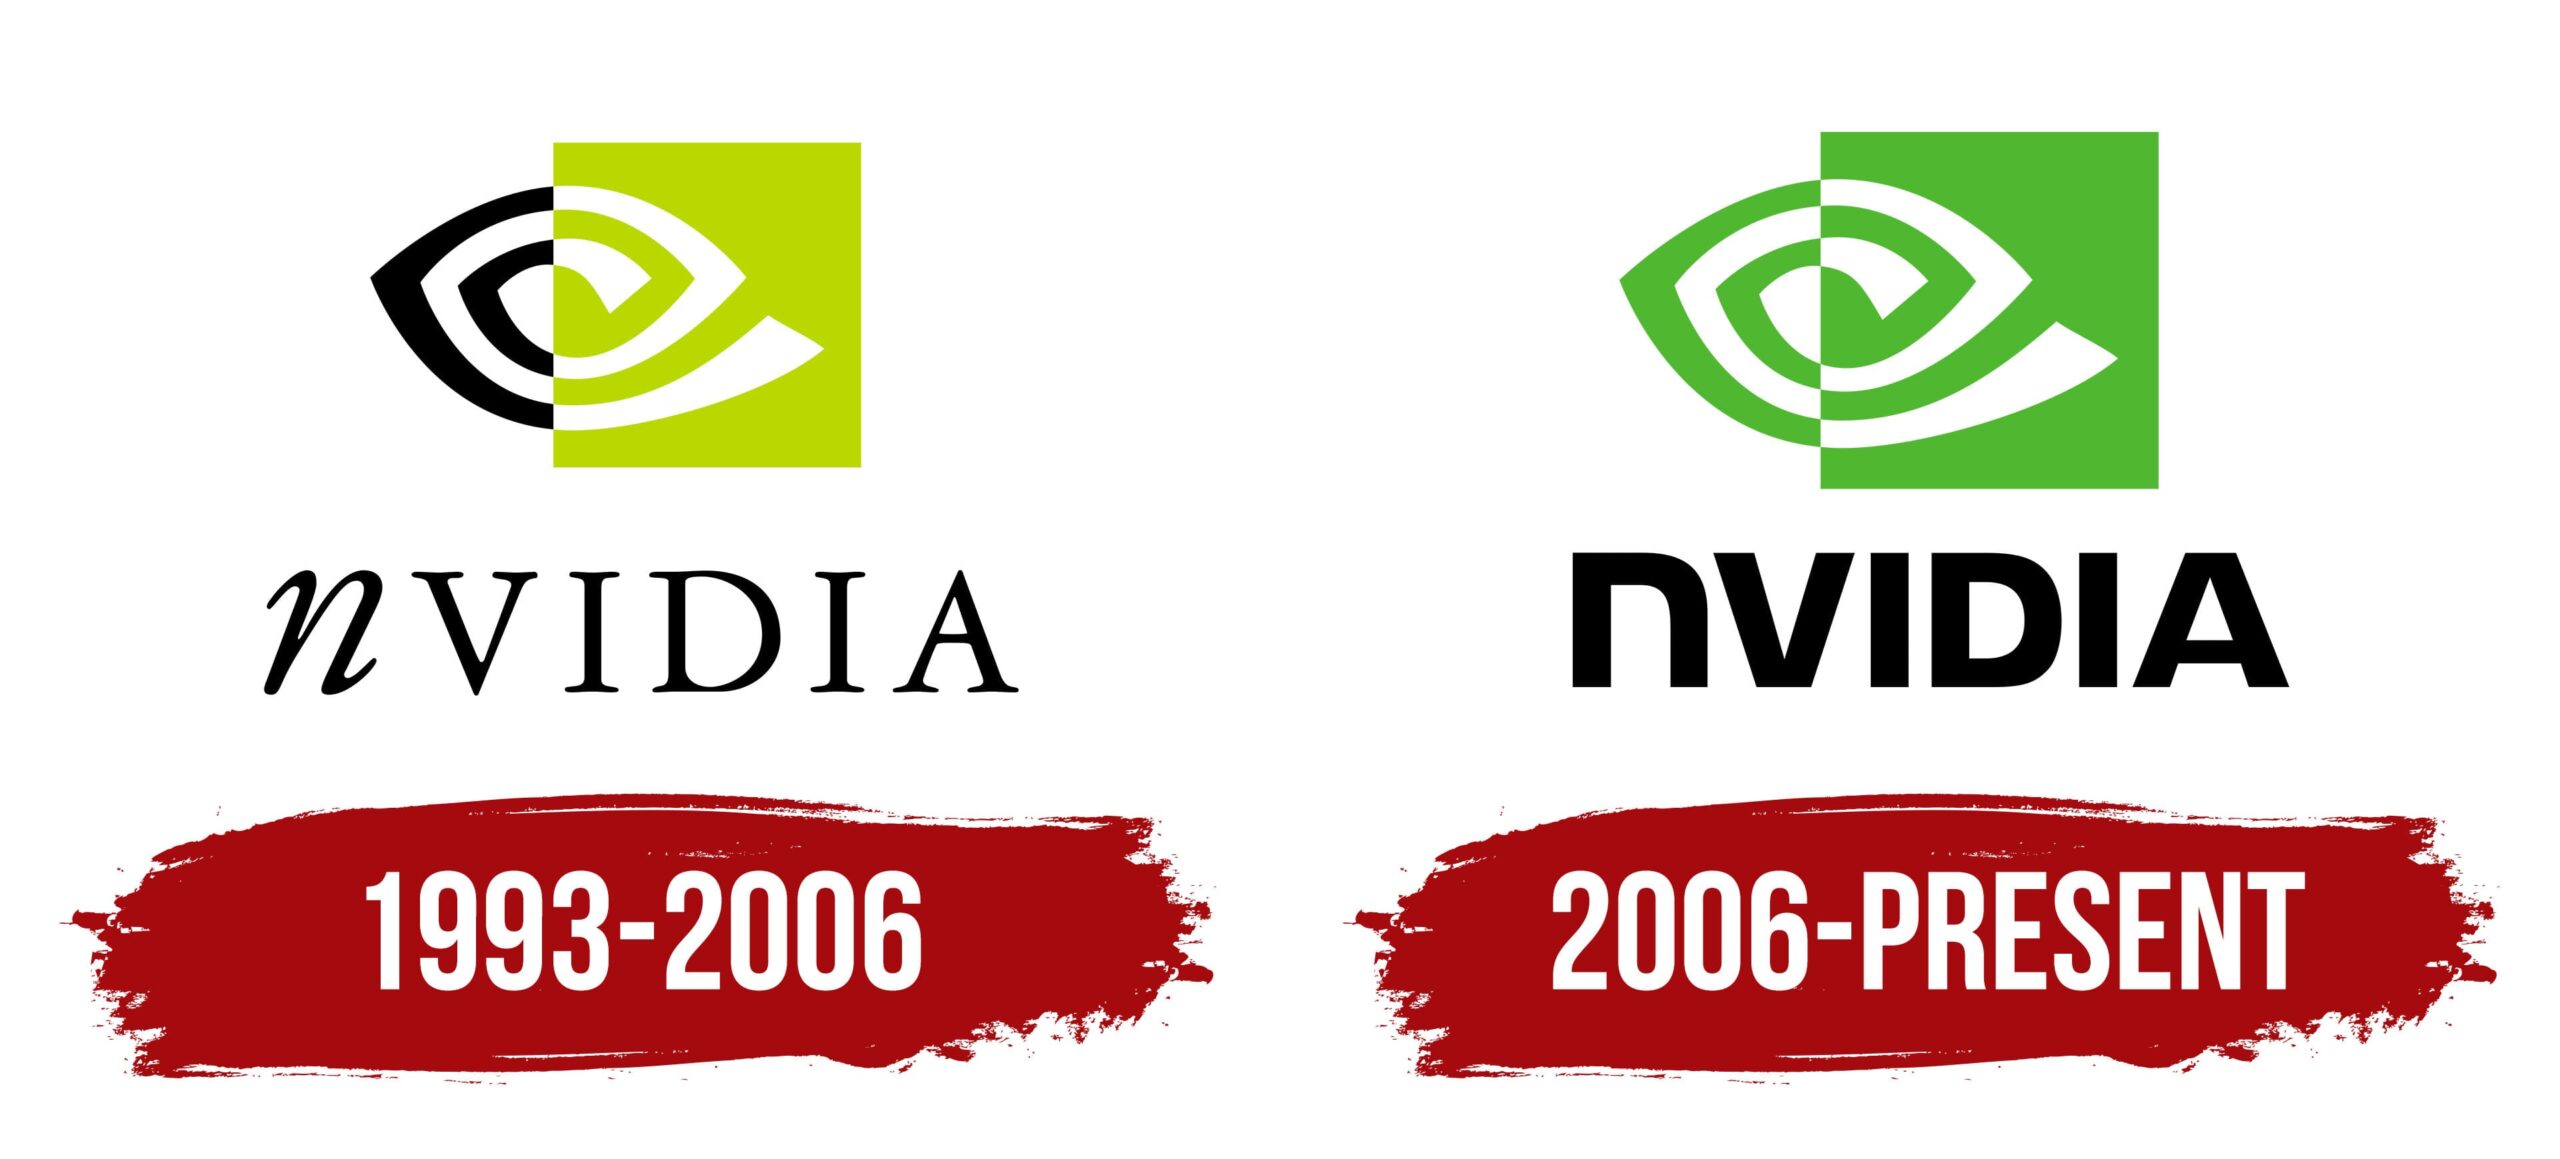 Nvidia Logo History scaled - لوگو و نام انویدیا به چه معناست؟